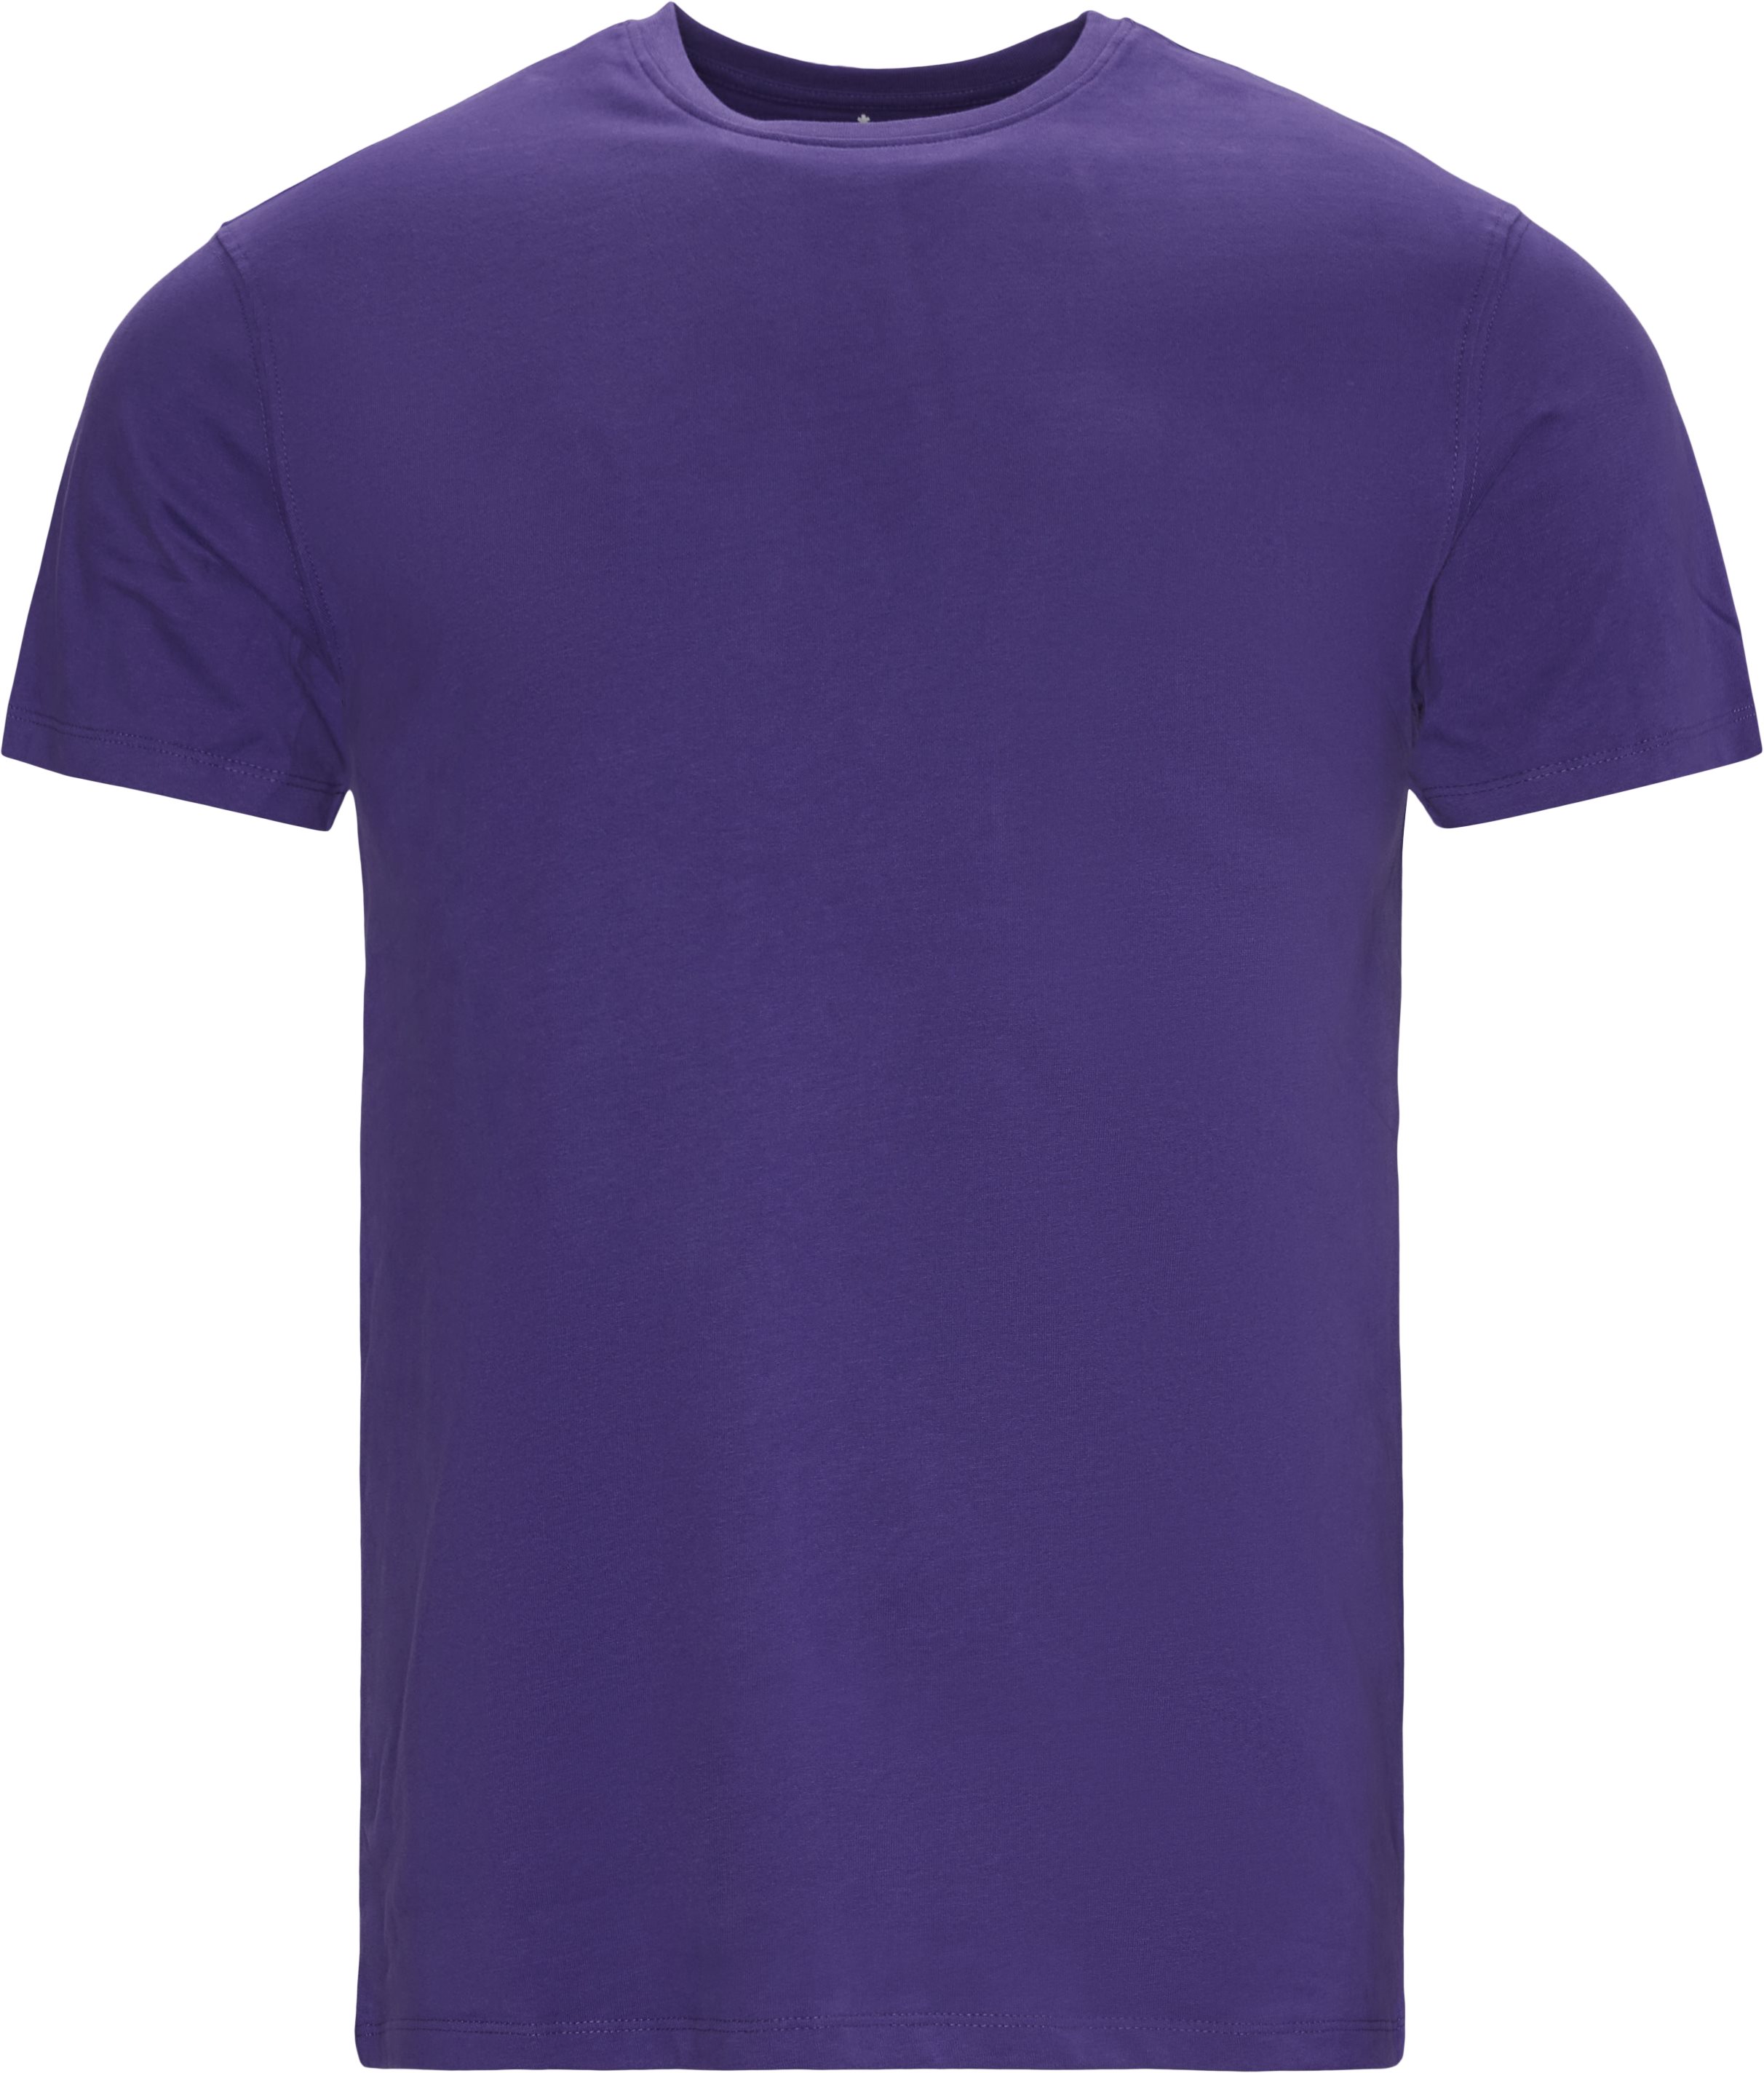 Brandon Crew Neck Tee - T-shirts - Regular fit - Lilac